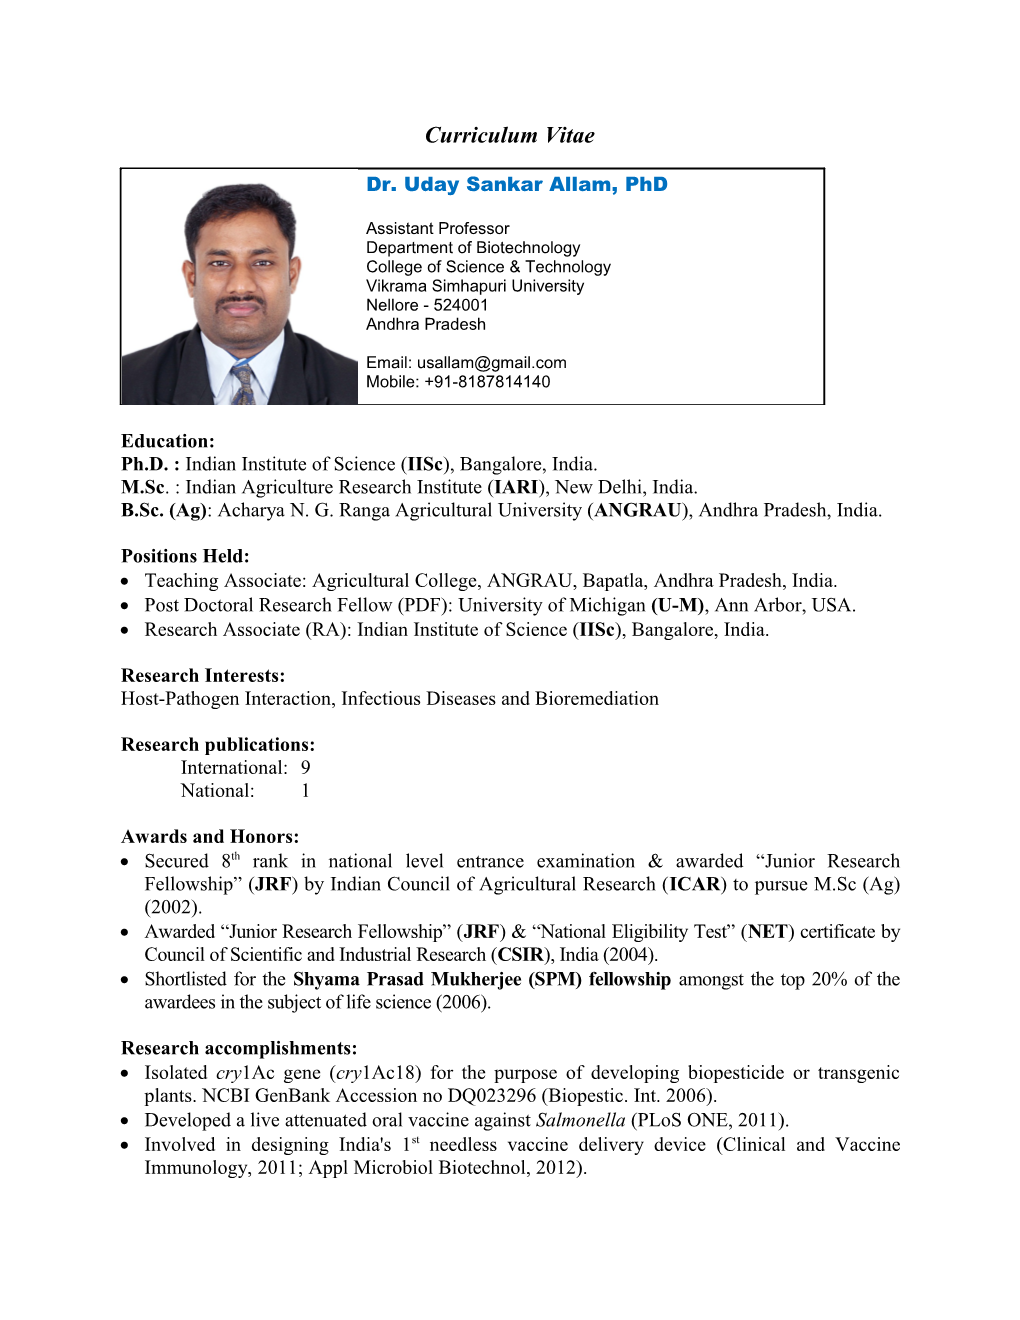 Dr. Uday Sankar Allam, Phd